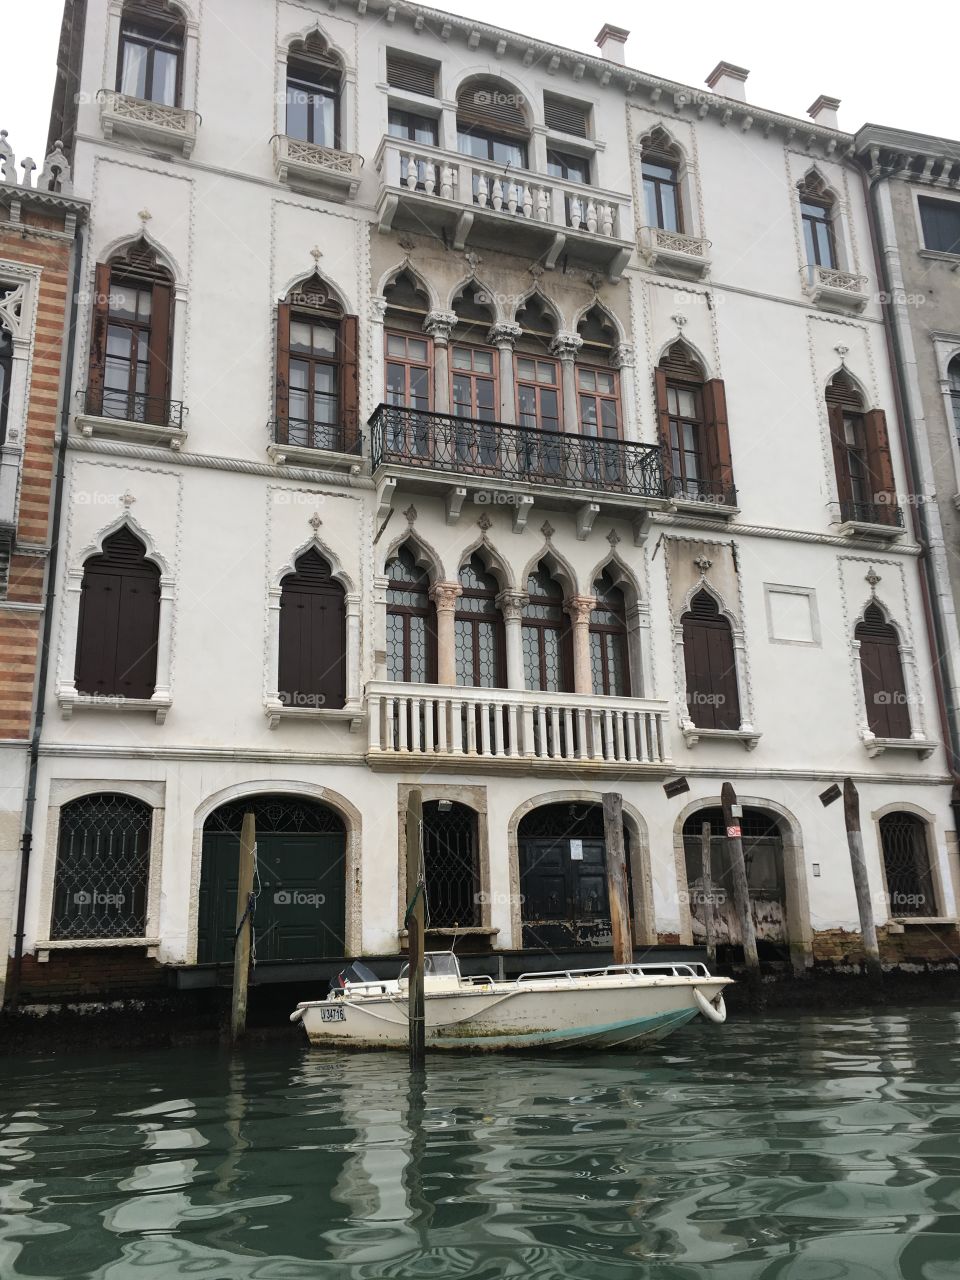 exploring Venice - with gondola style!